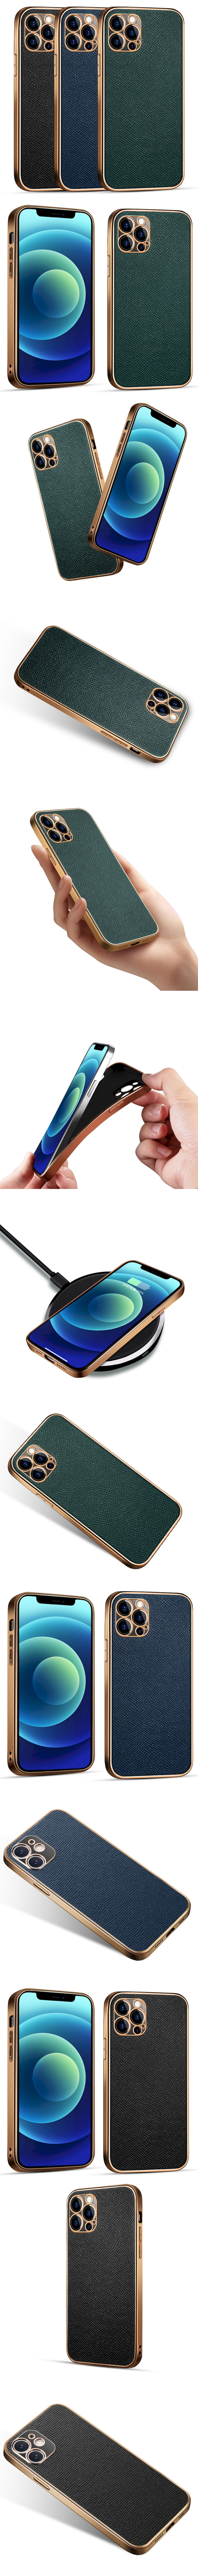 599-IPhone-真皮十字紋金框軟殼保護套造型手機套背蓋(IPhone 12 Pro Max)